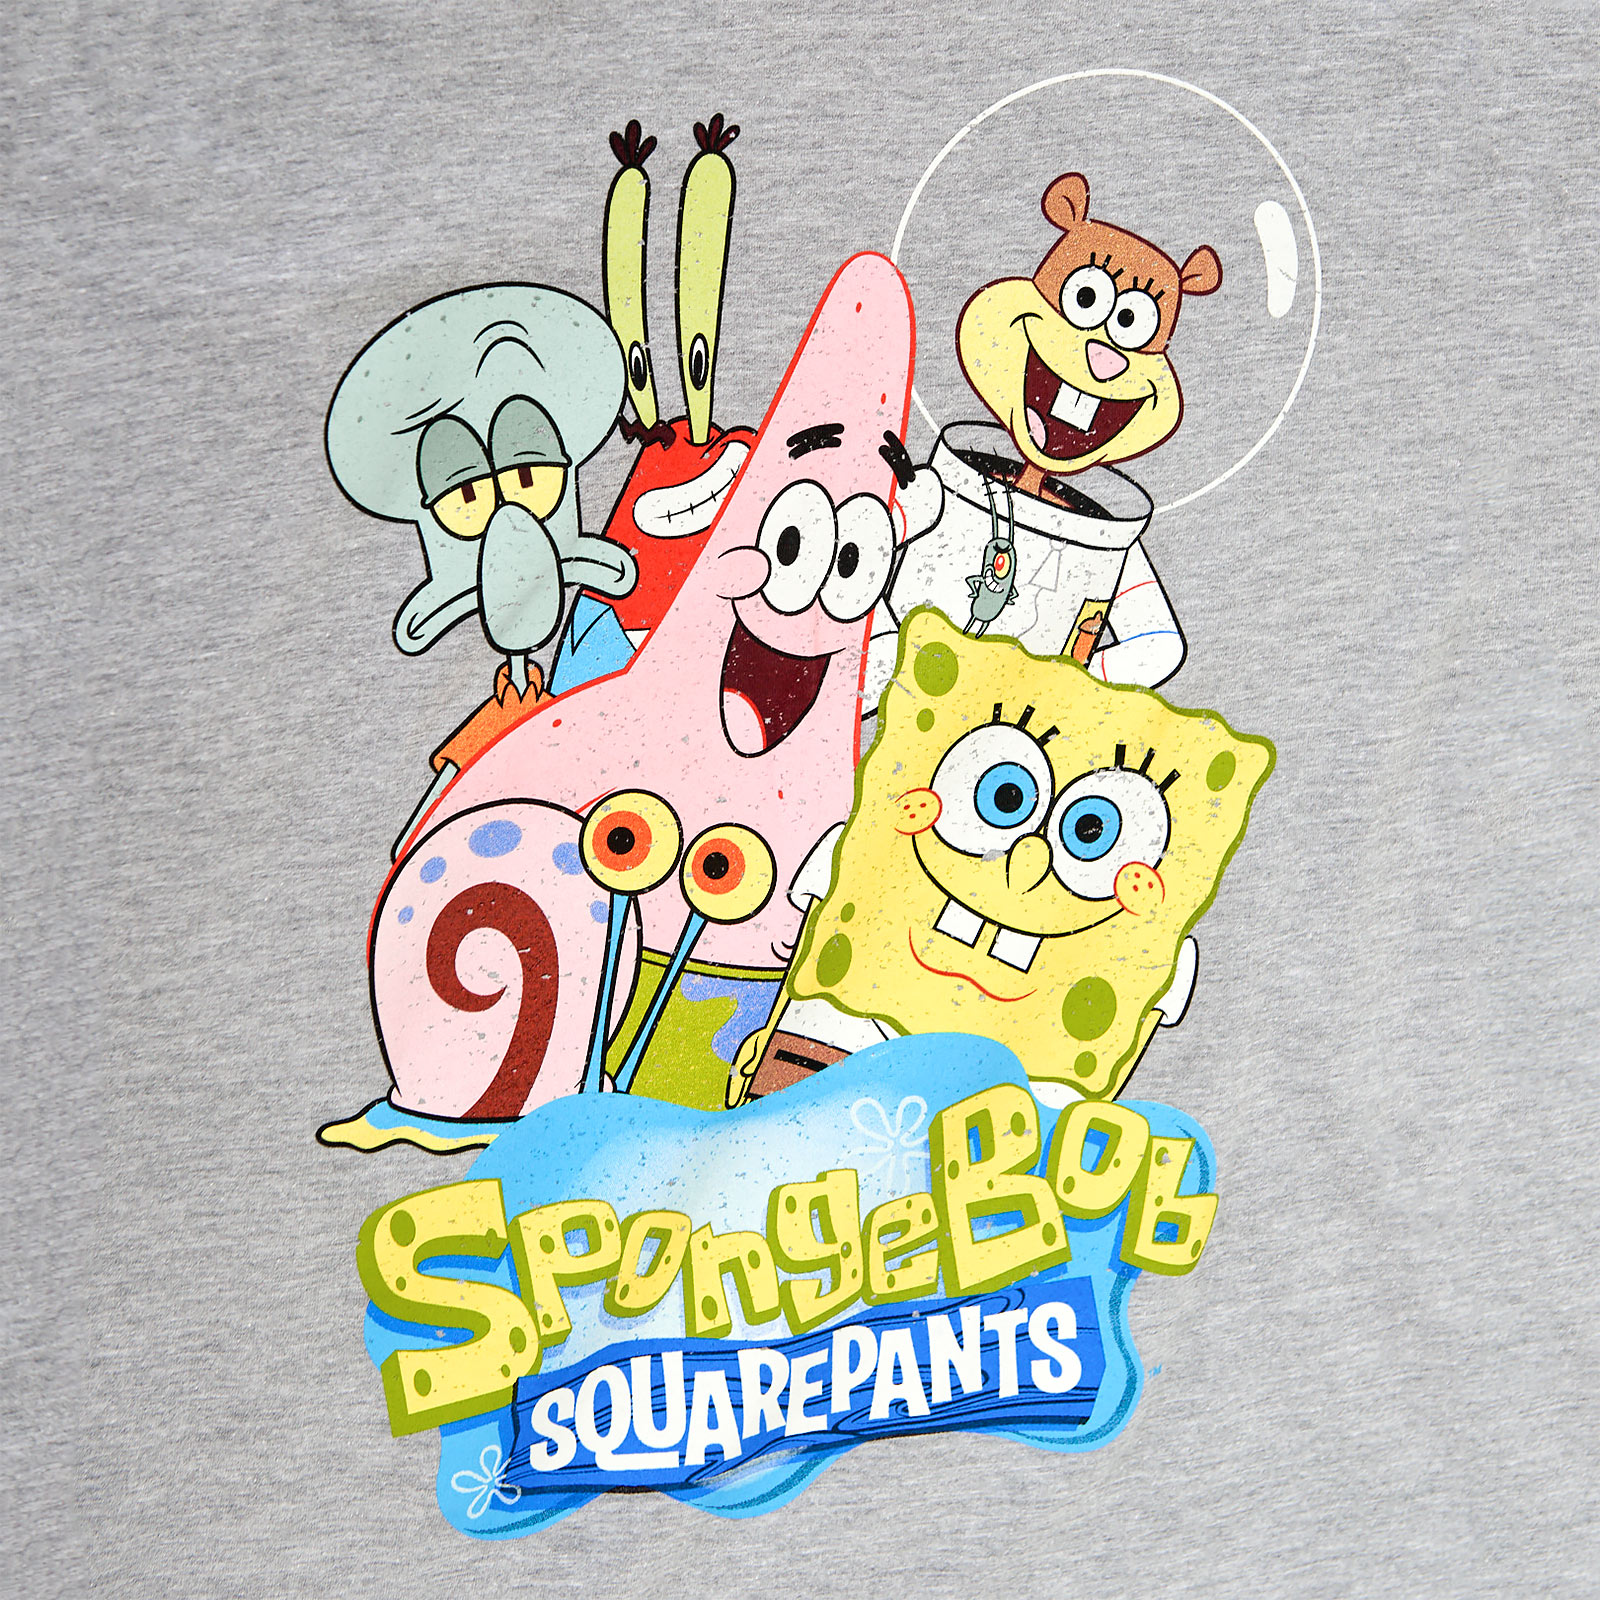 SpongeBob - T-shirt Friends Together gris